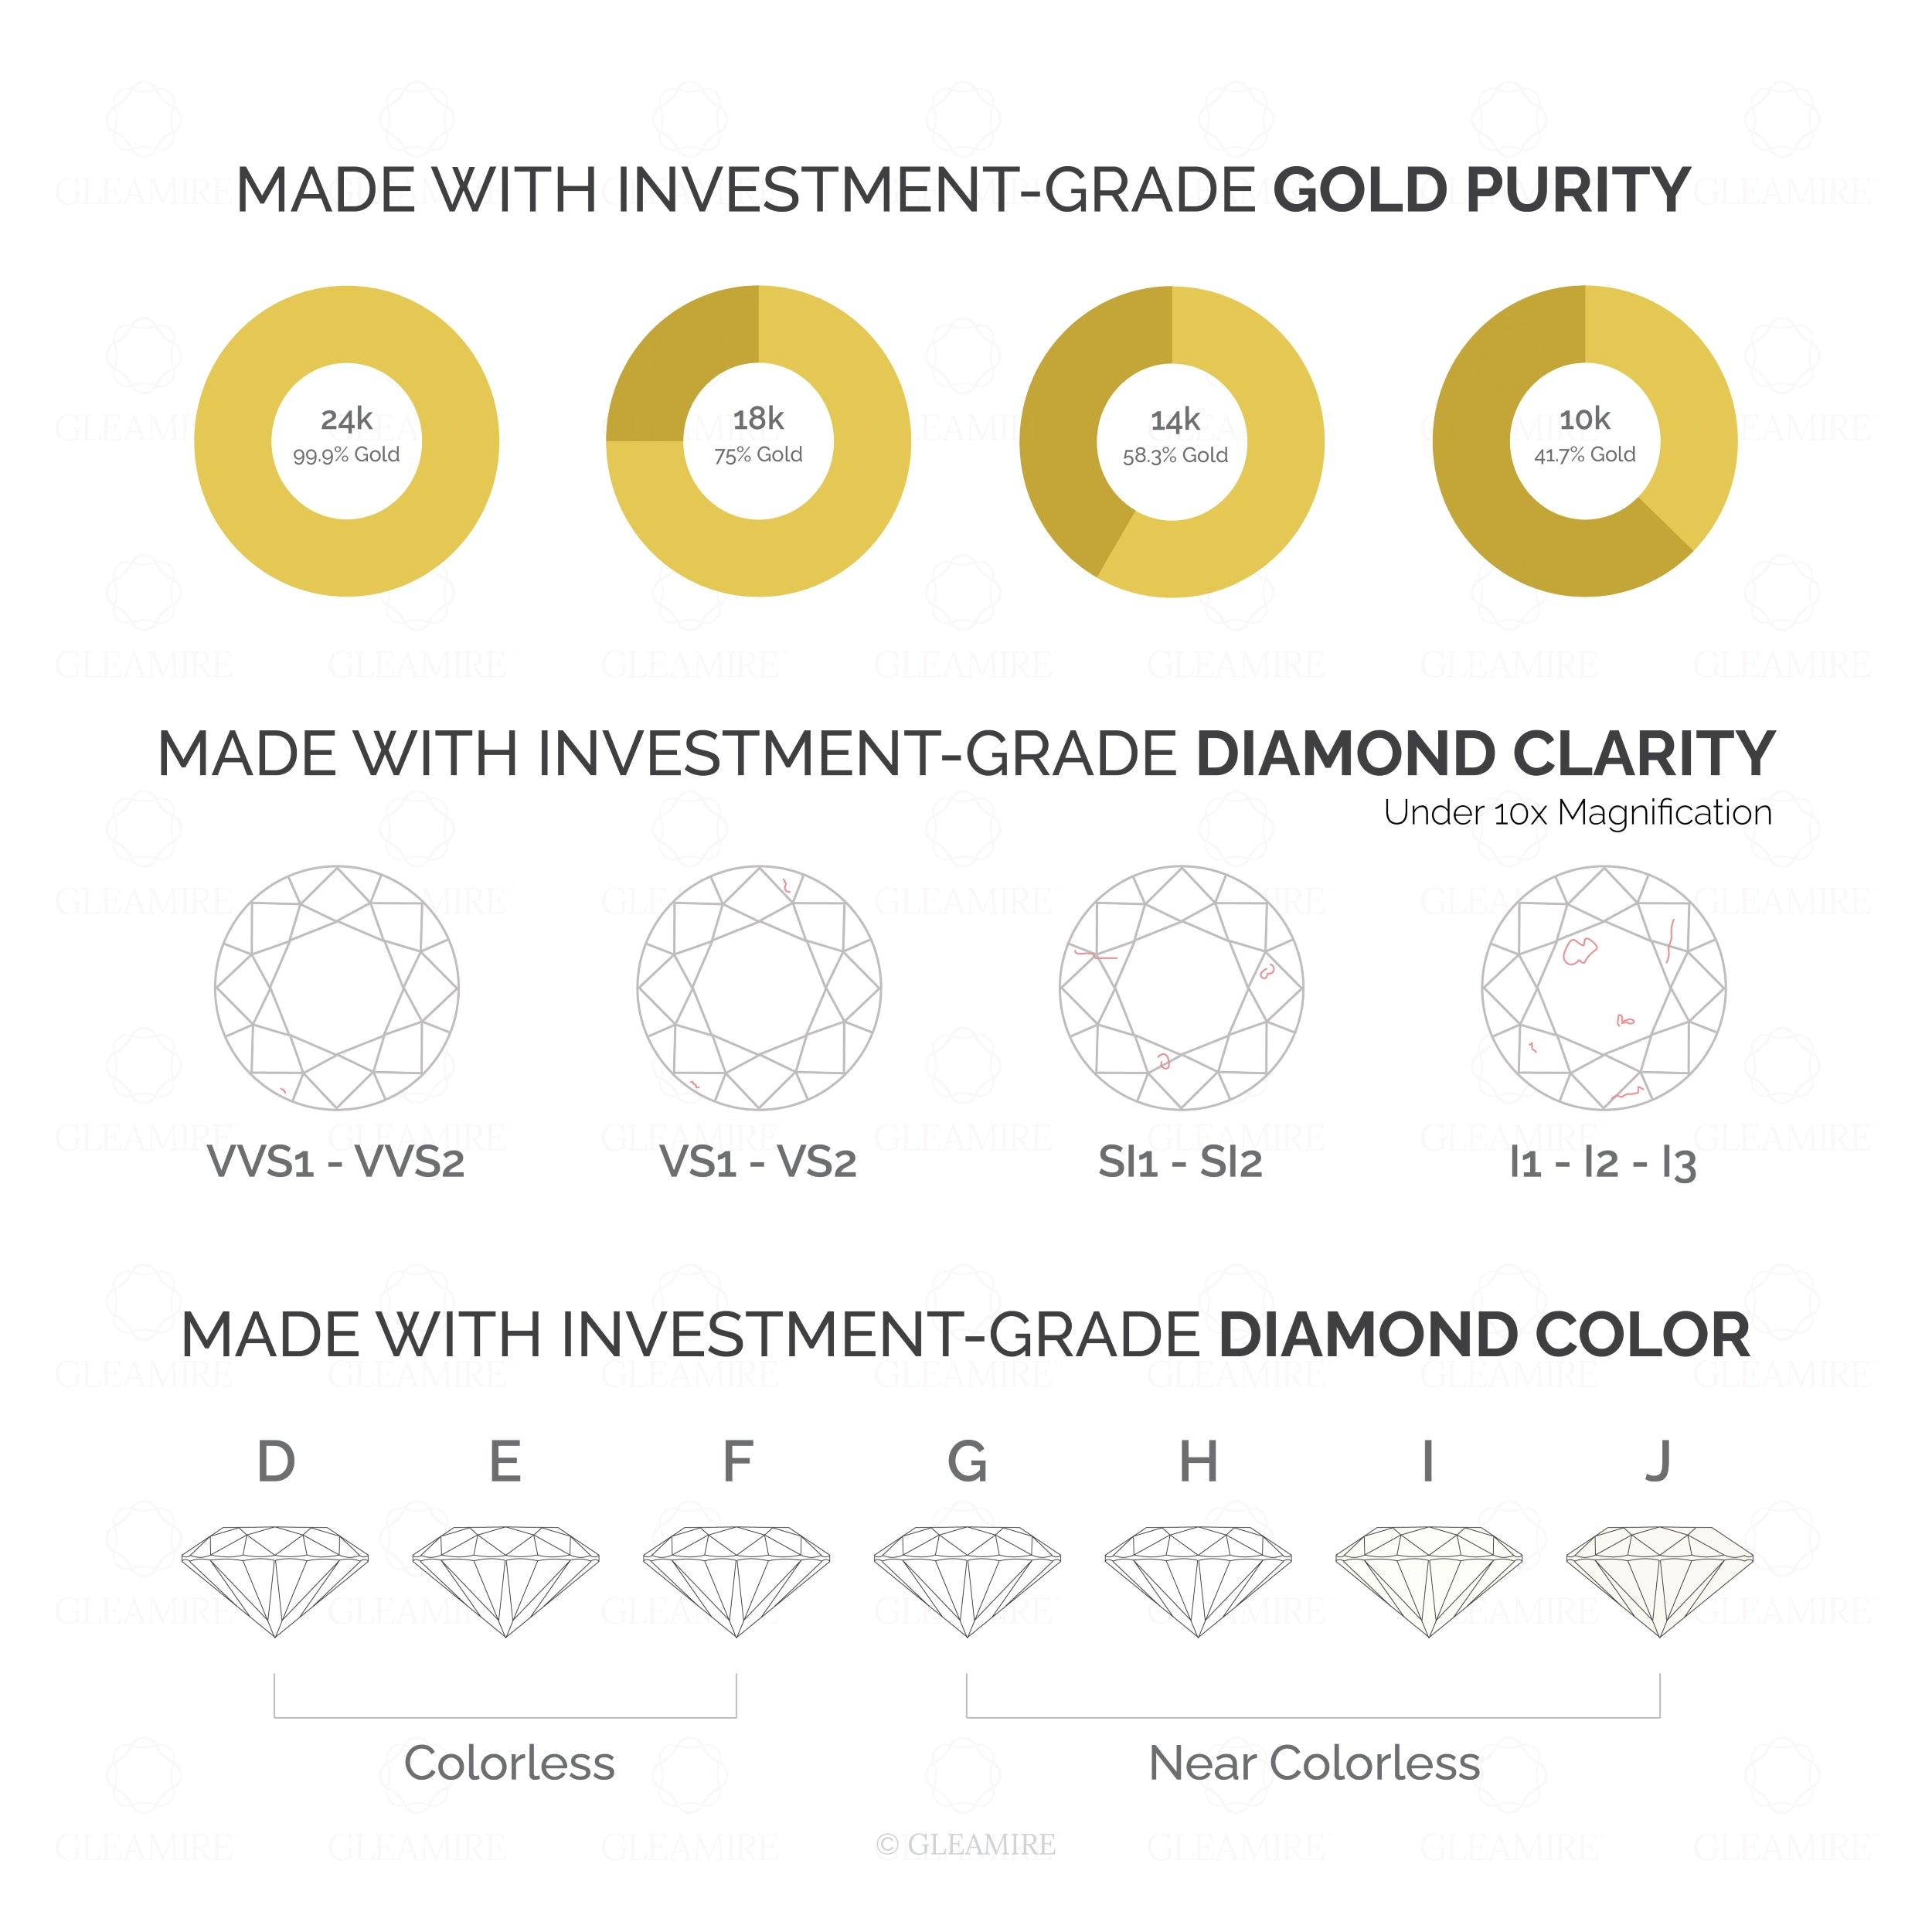 Certified 14K Gold Certified Natural Diamonds Designer Sun Flower Charm White Necklace